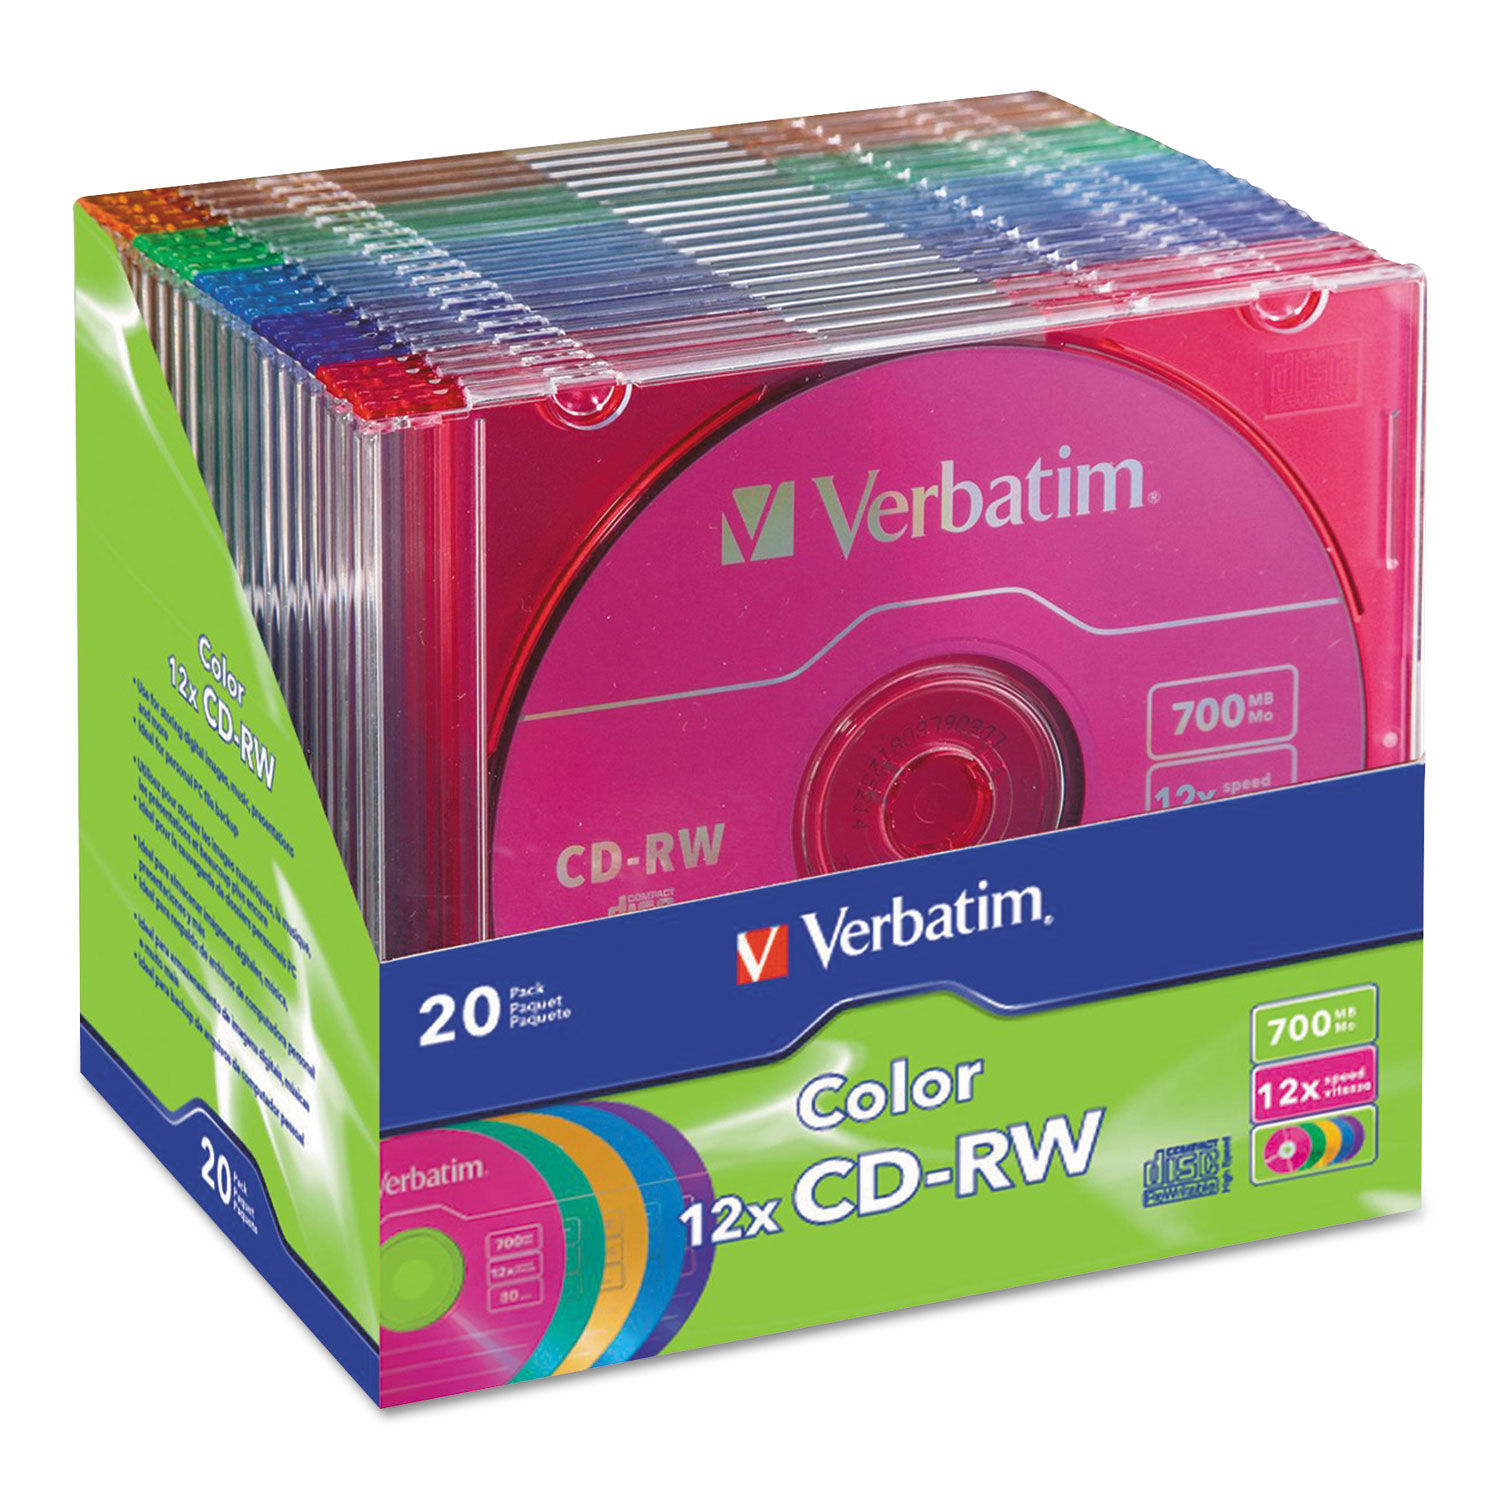 CD-RW High-Speed Rewritable Disc by Verbatim® VER96685